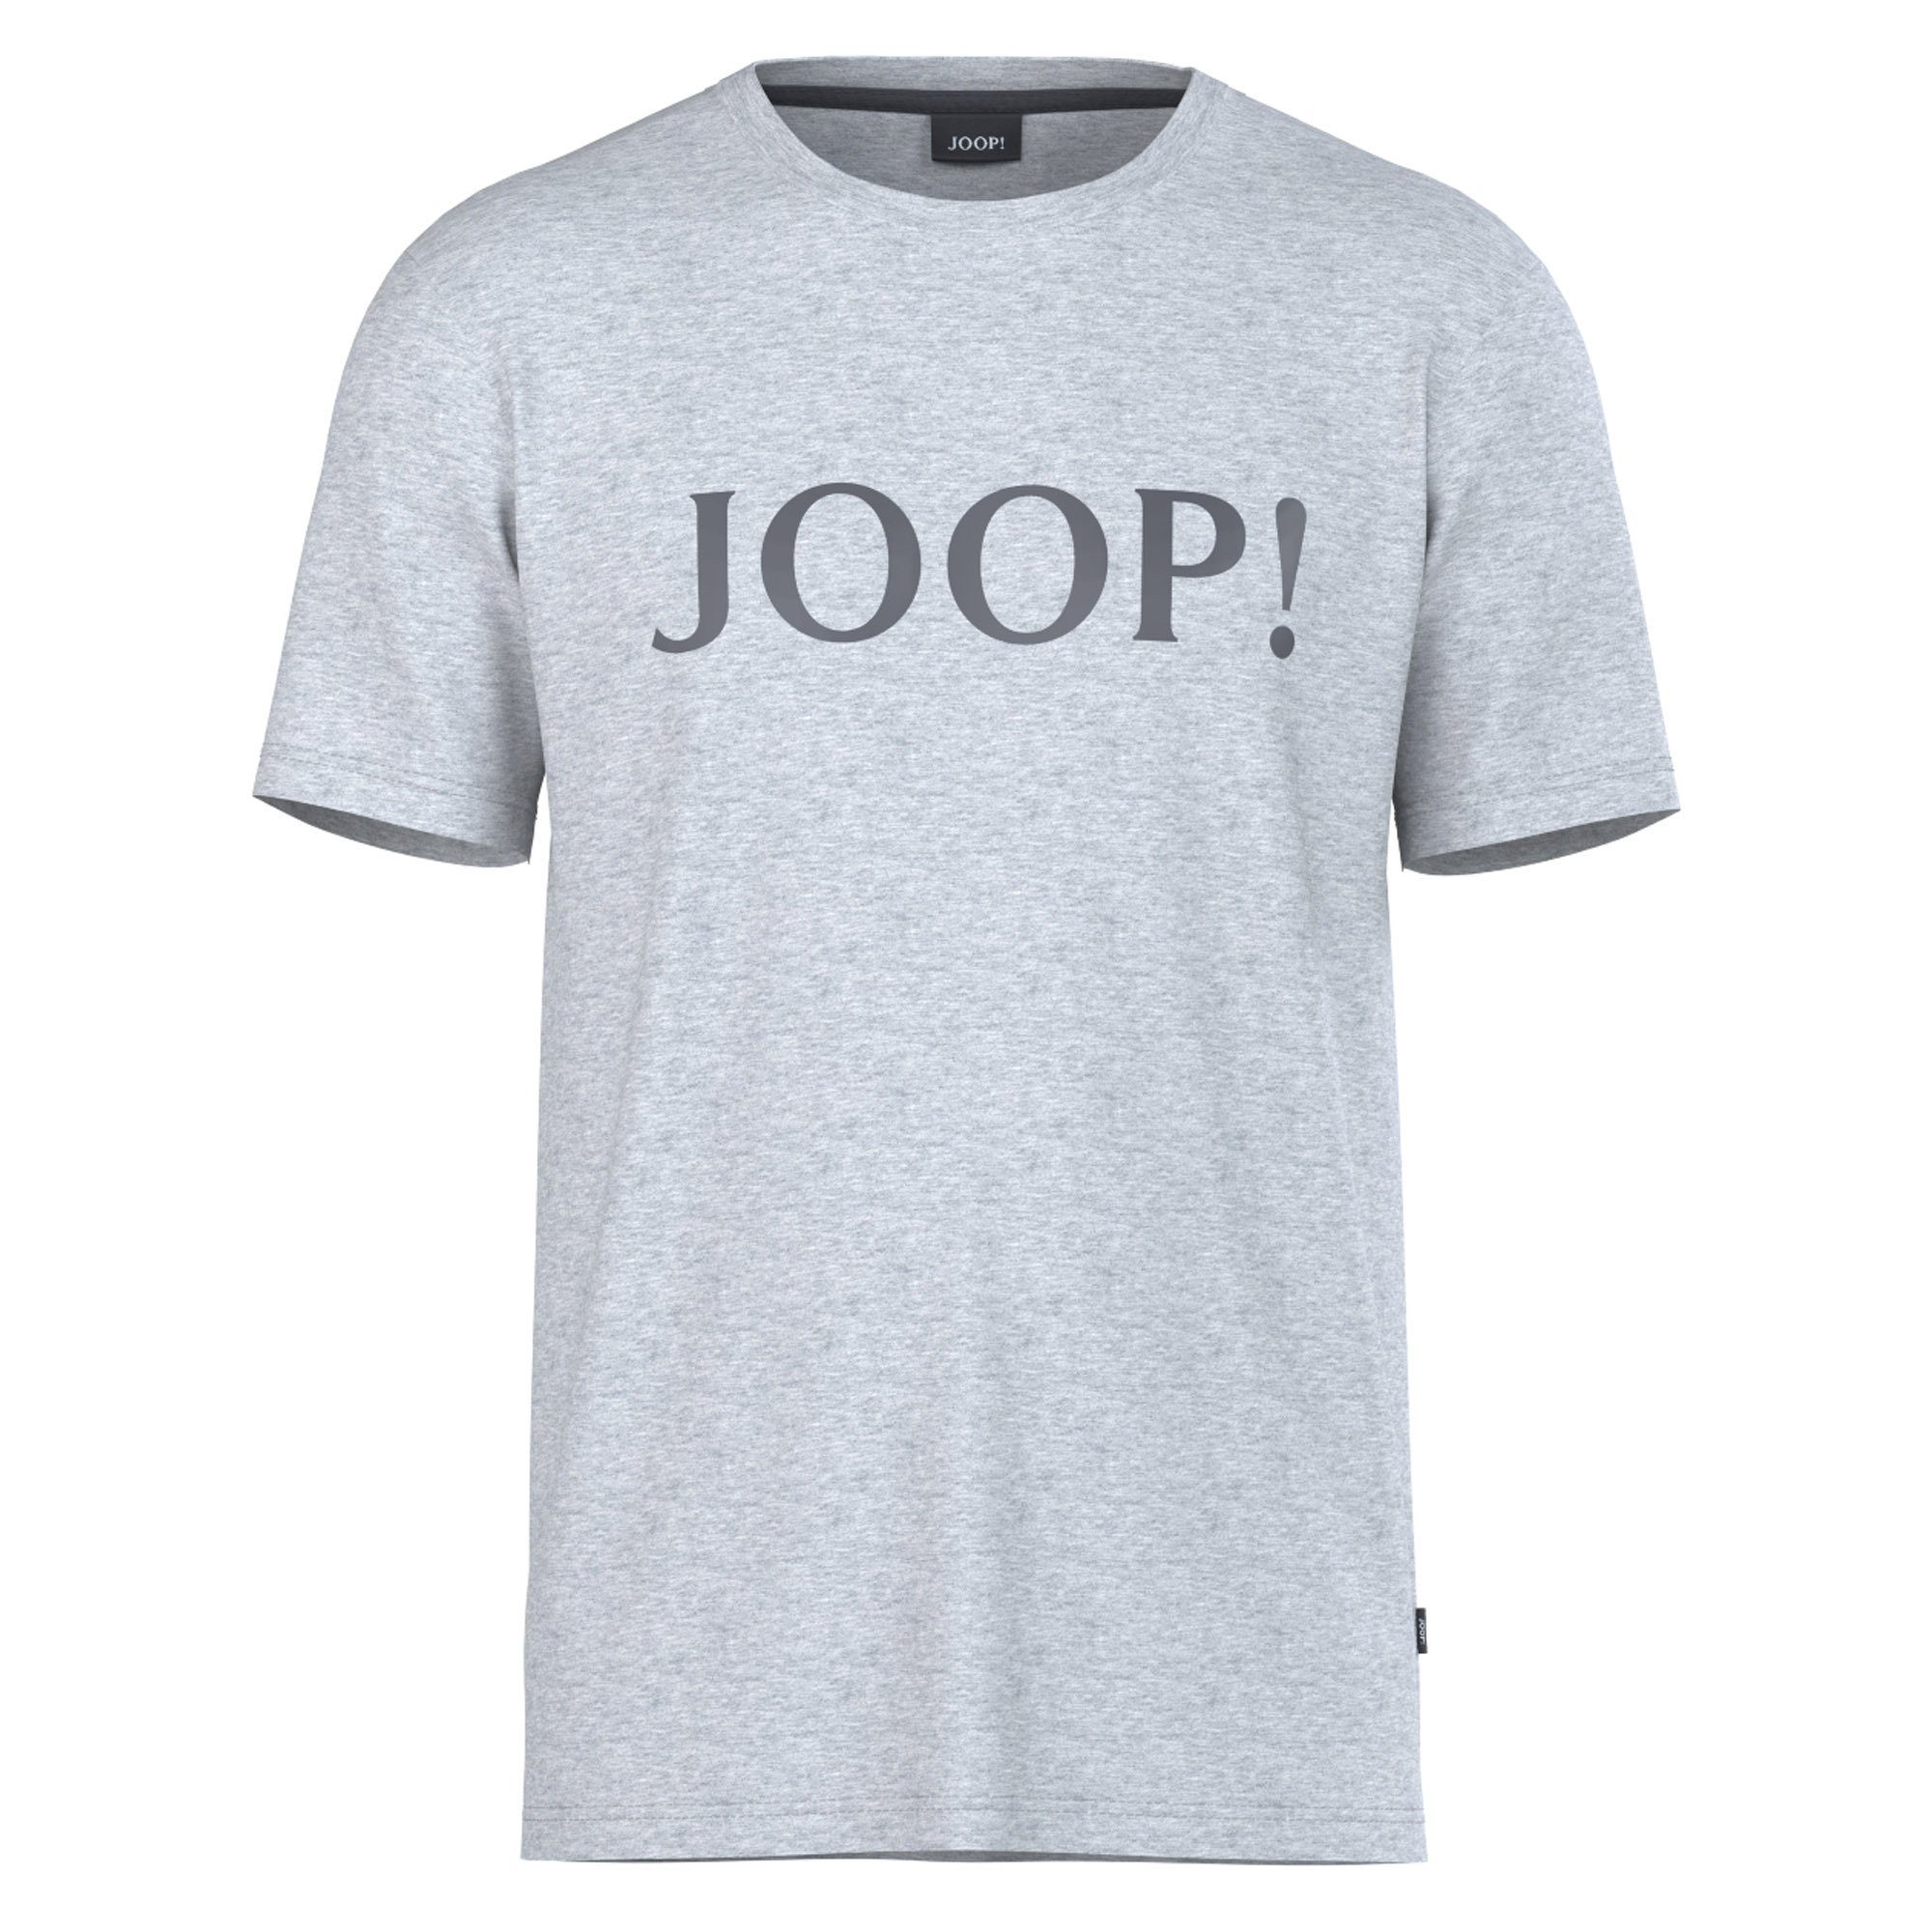 Joop! T-Shirt Herren T-Shirt - Halbarm Rundhals, JJ-01Alerio-2, Grau